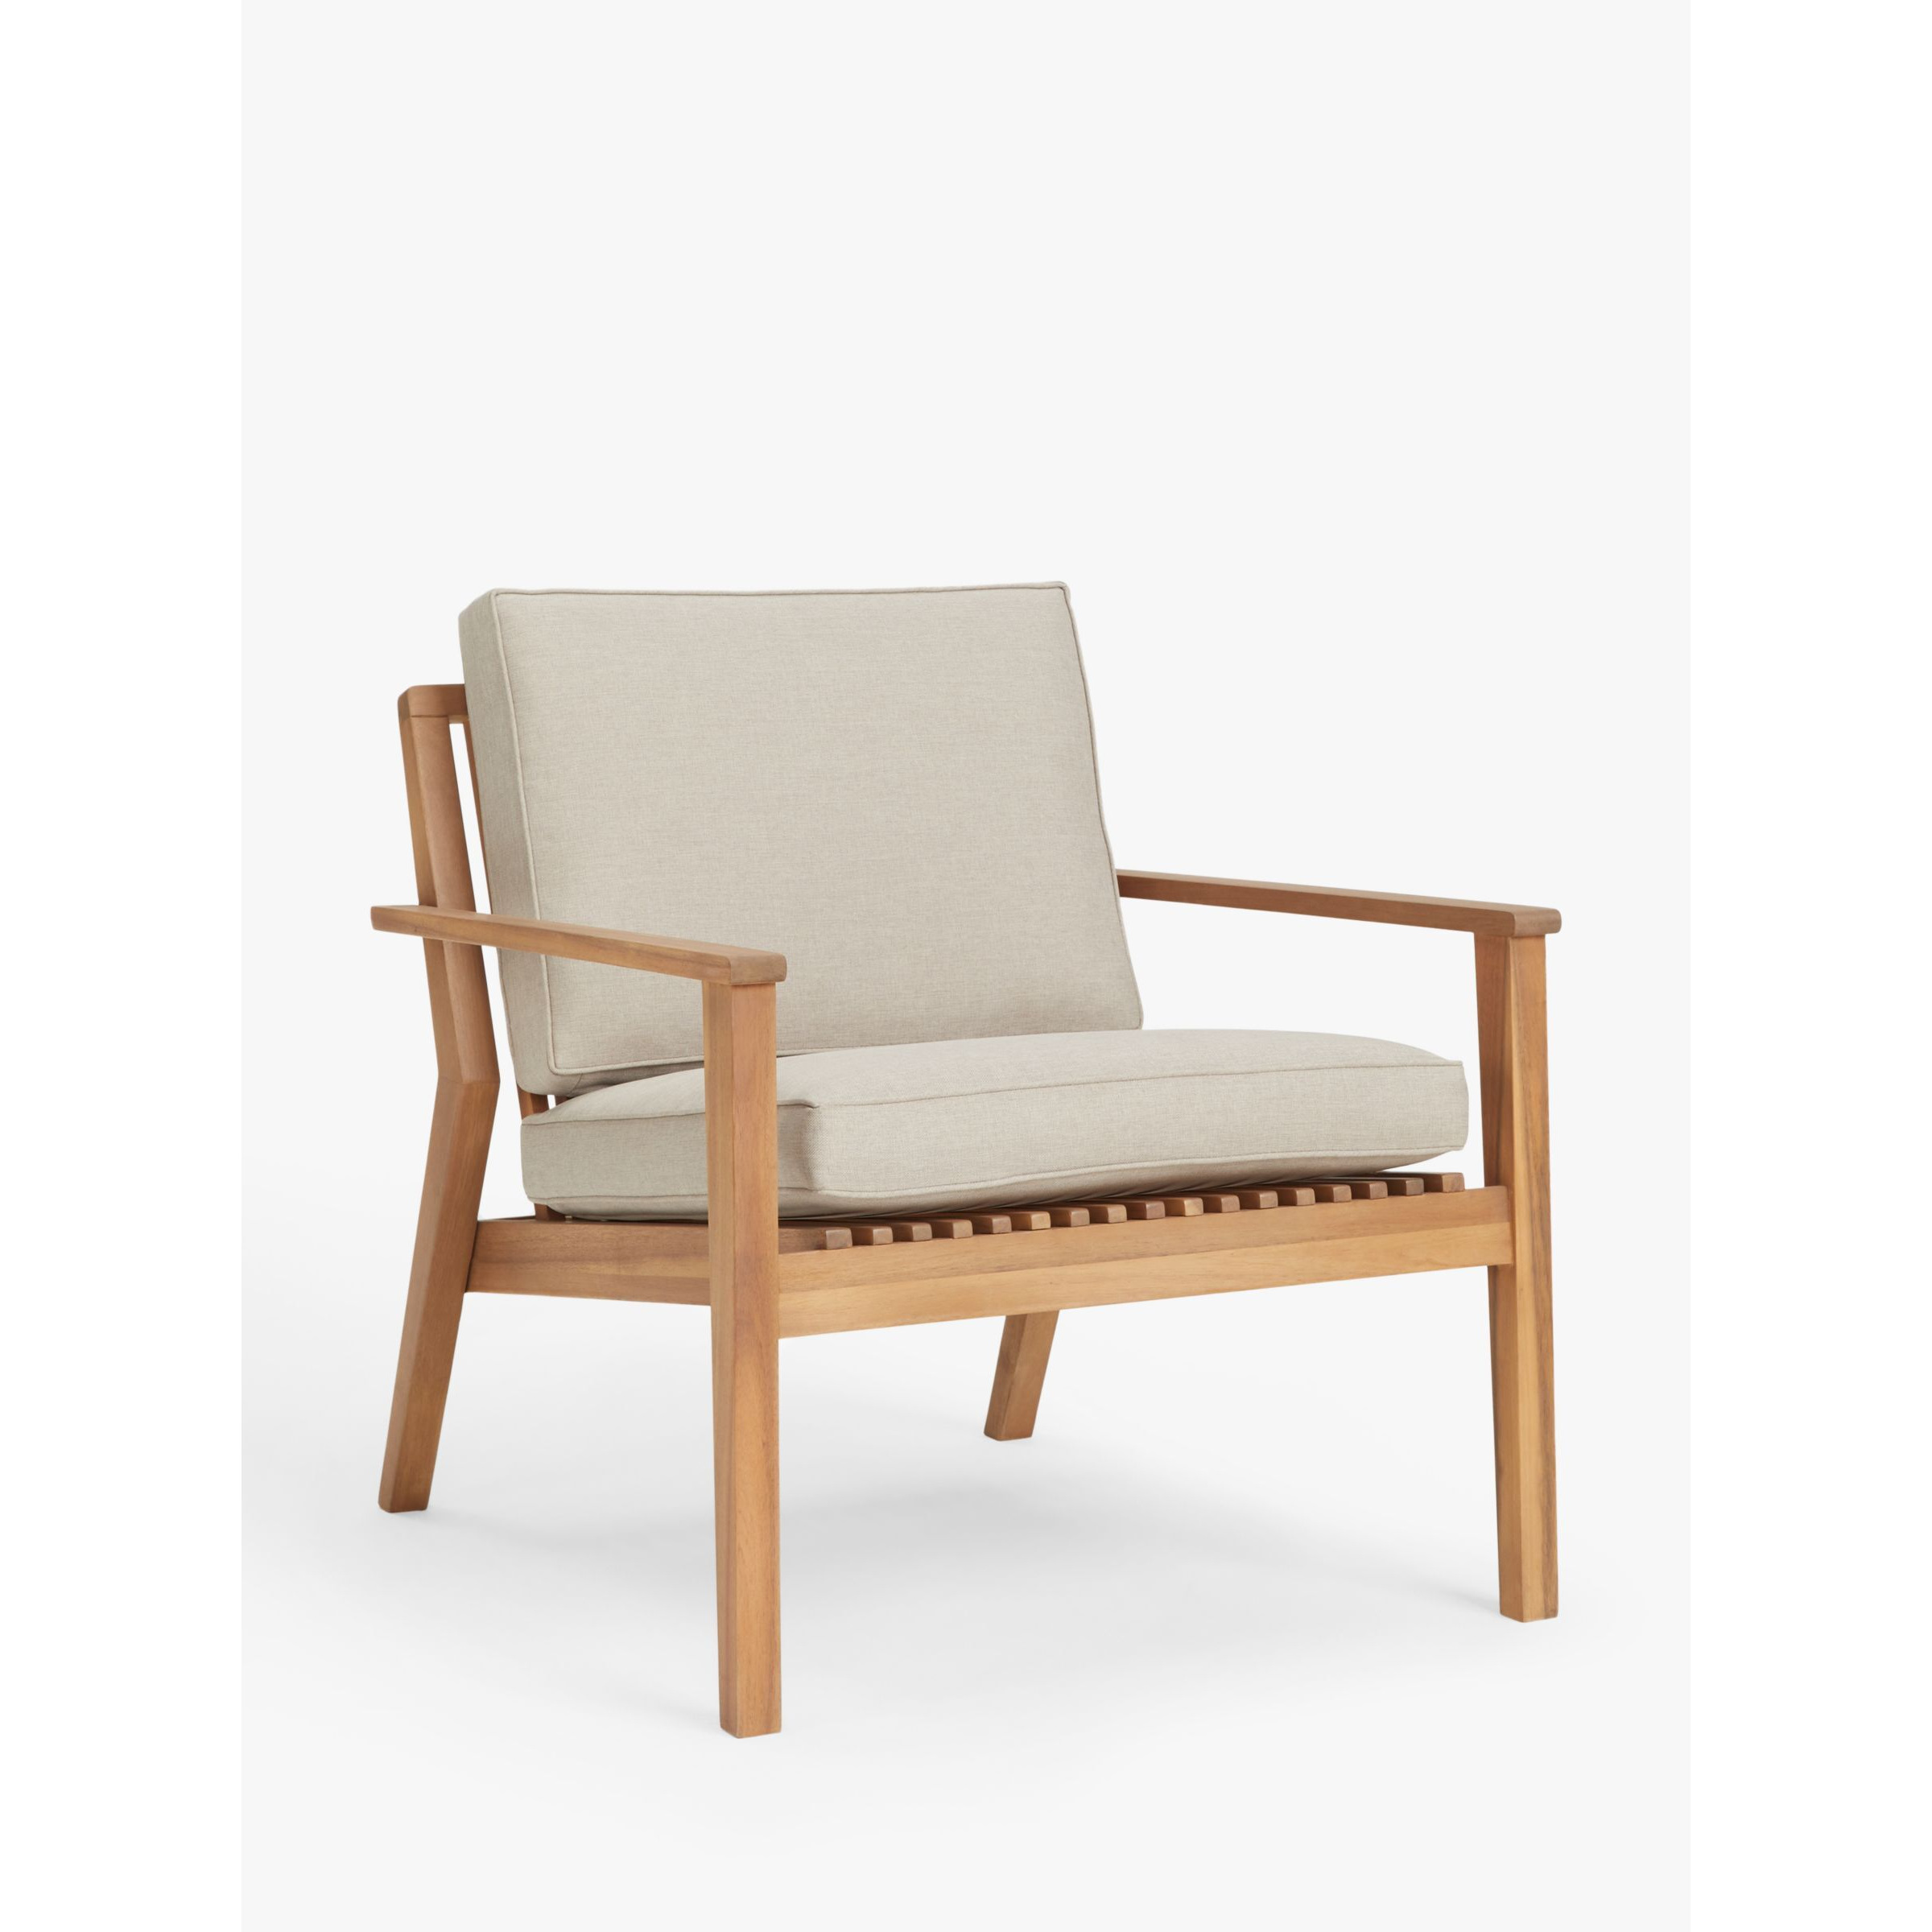 John Lewis Mona Garden Lounge Chair, FSC-Certified (Acacia Wood), Natural - image 1